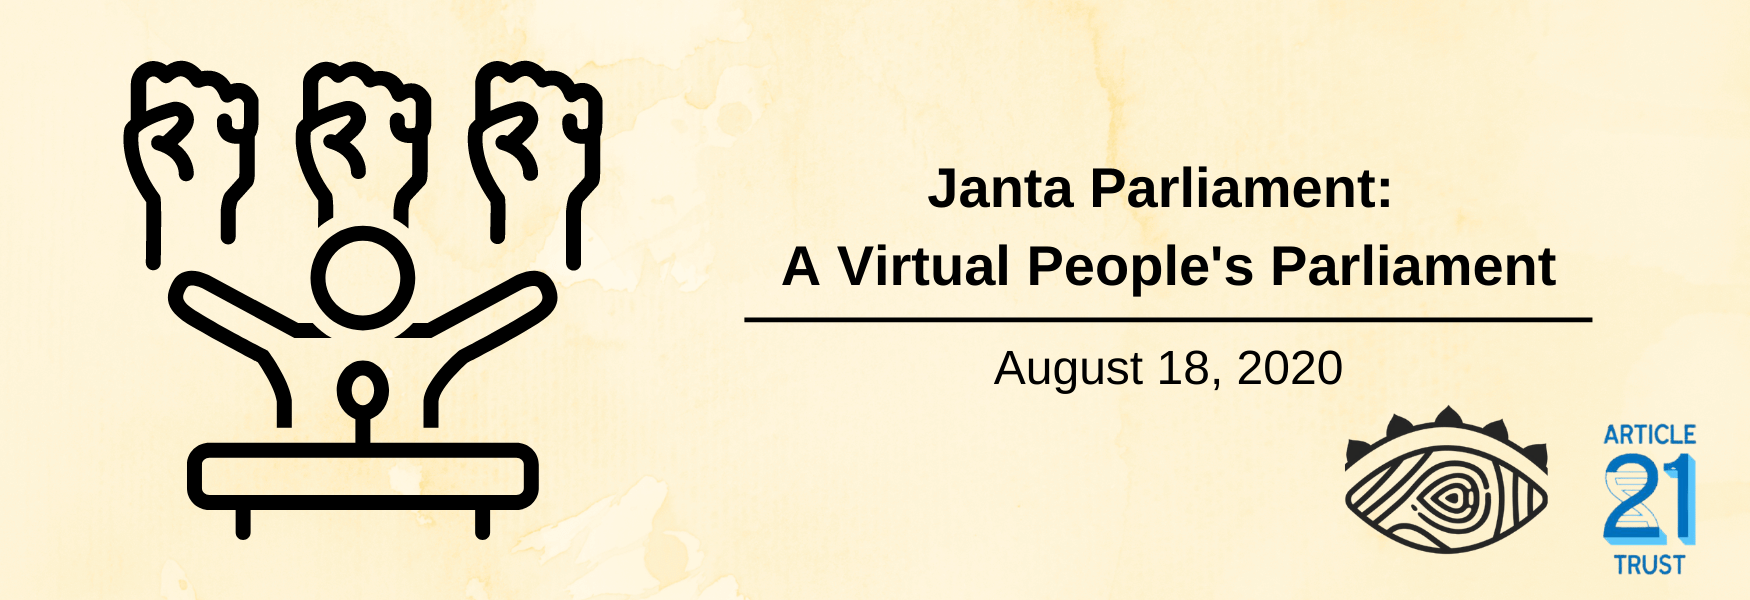 Janta Parliament: A Virtual People's Parliament 